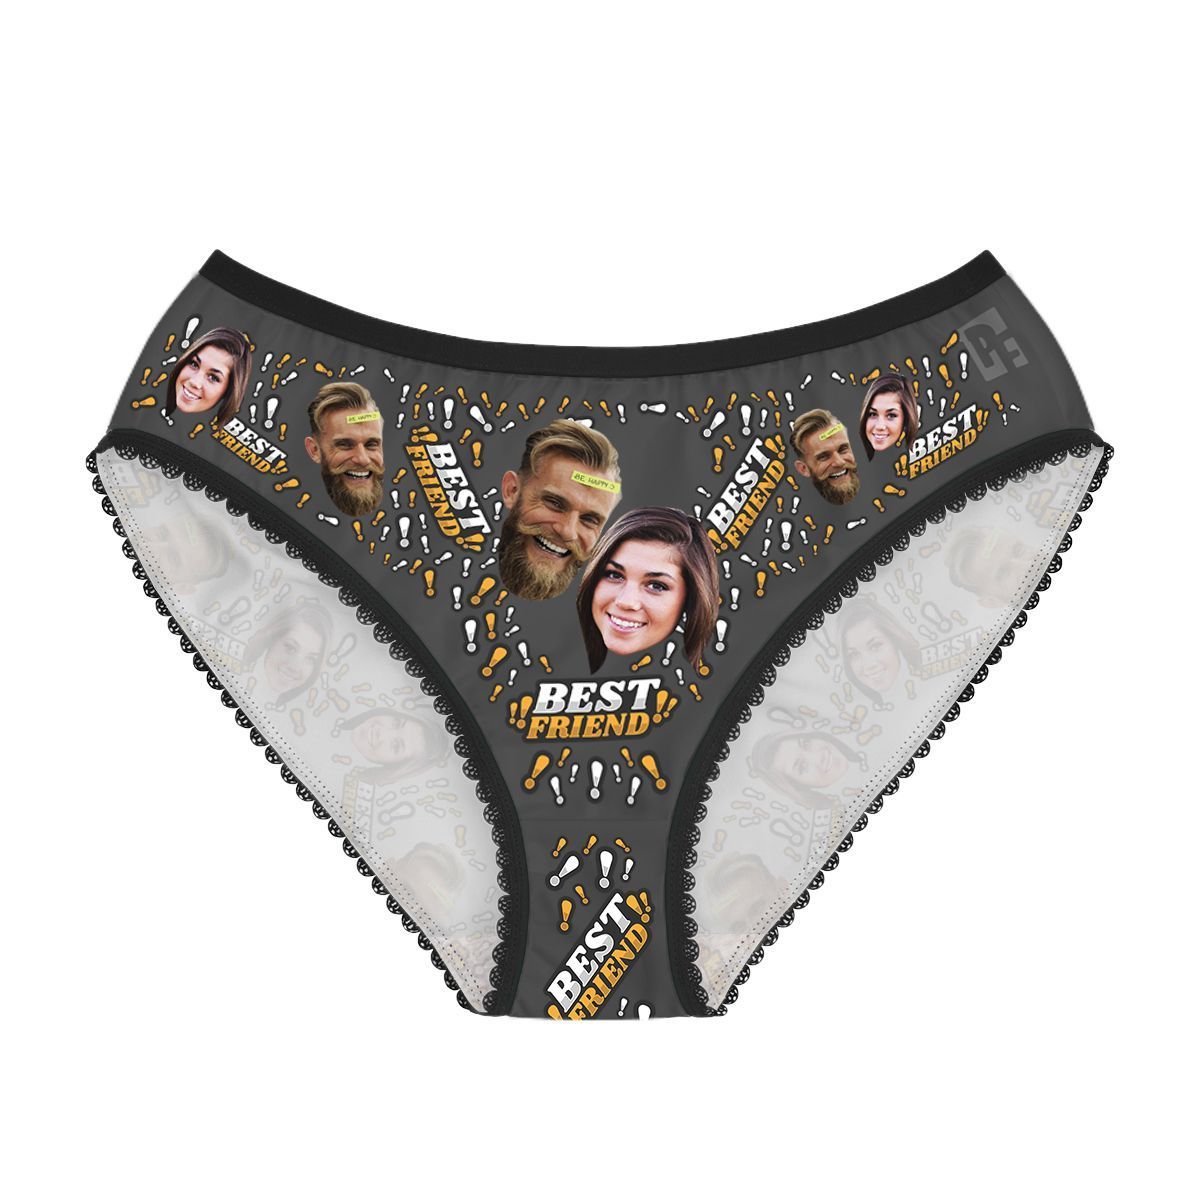 Mint Best Friend women's underwear briefs personalized with photo printed on them